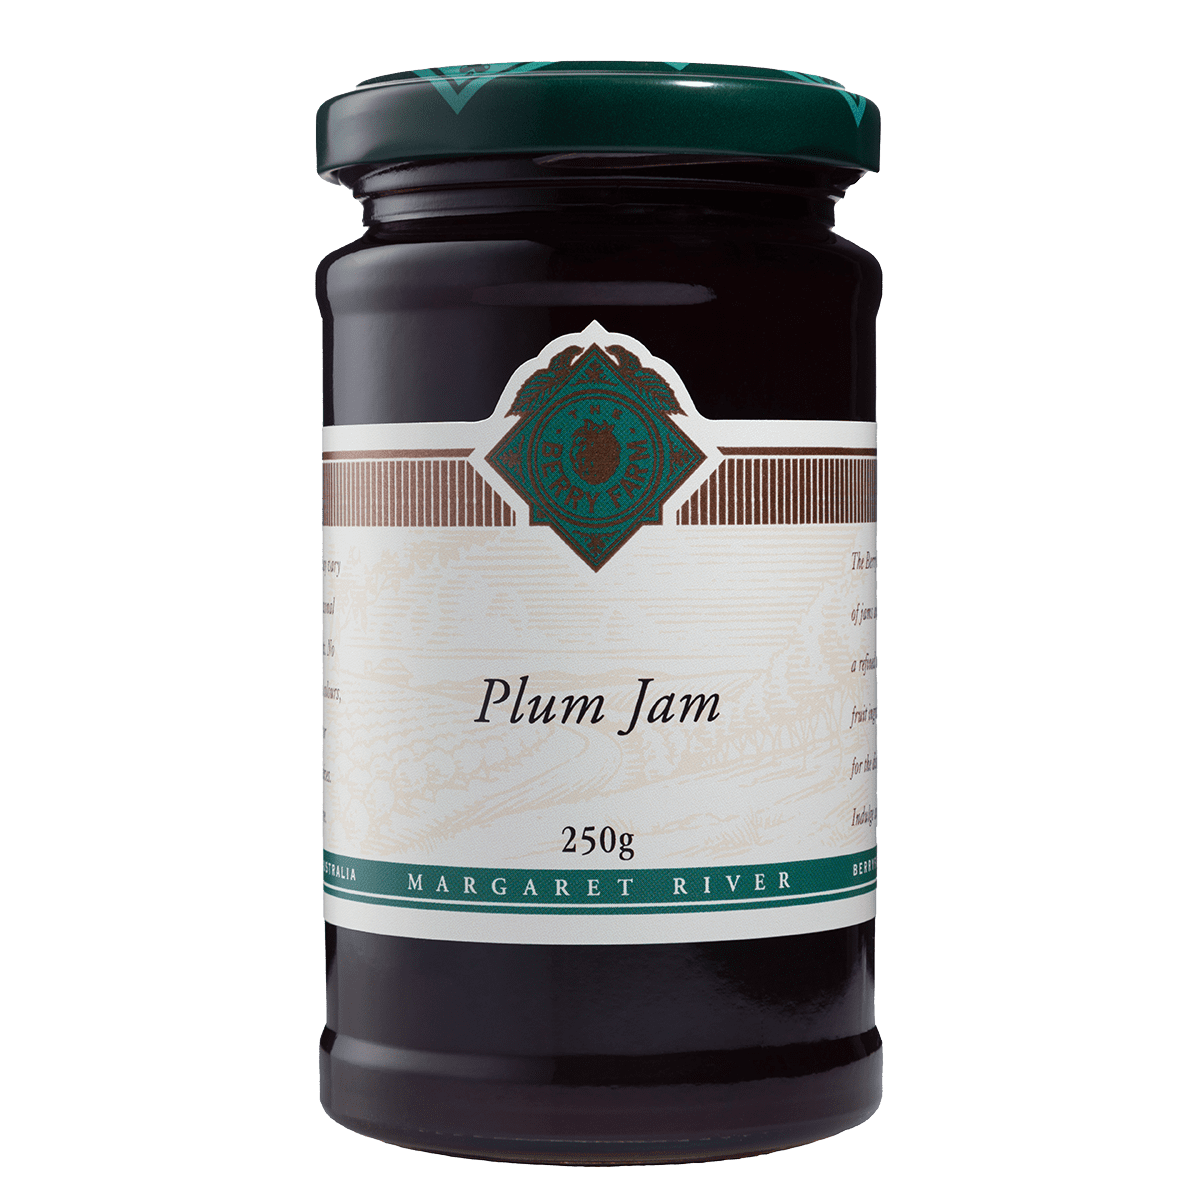 A jar of Plum Jam